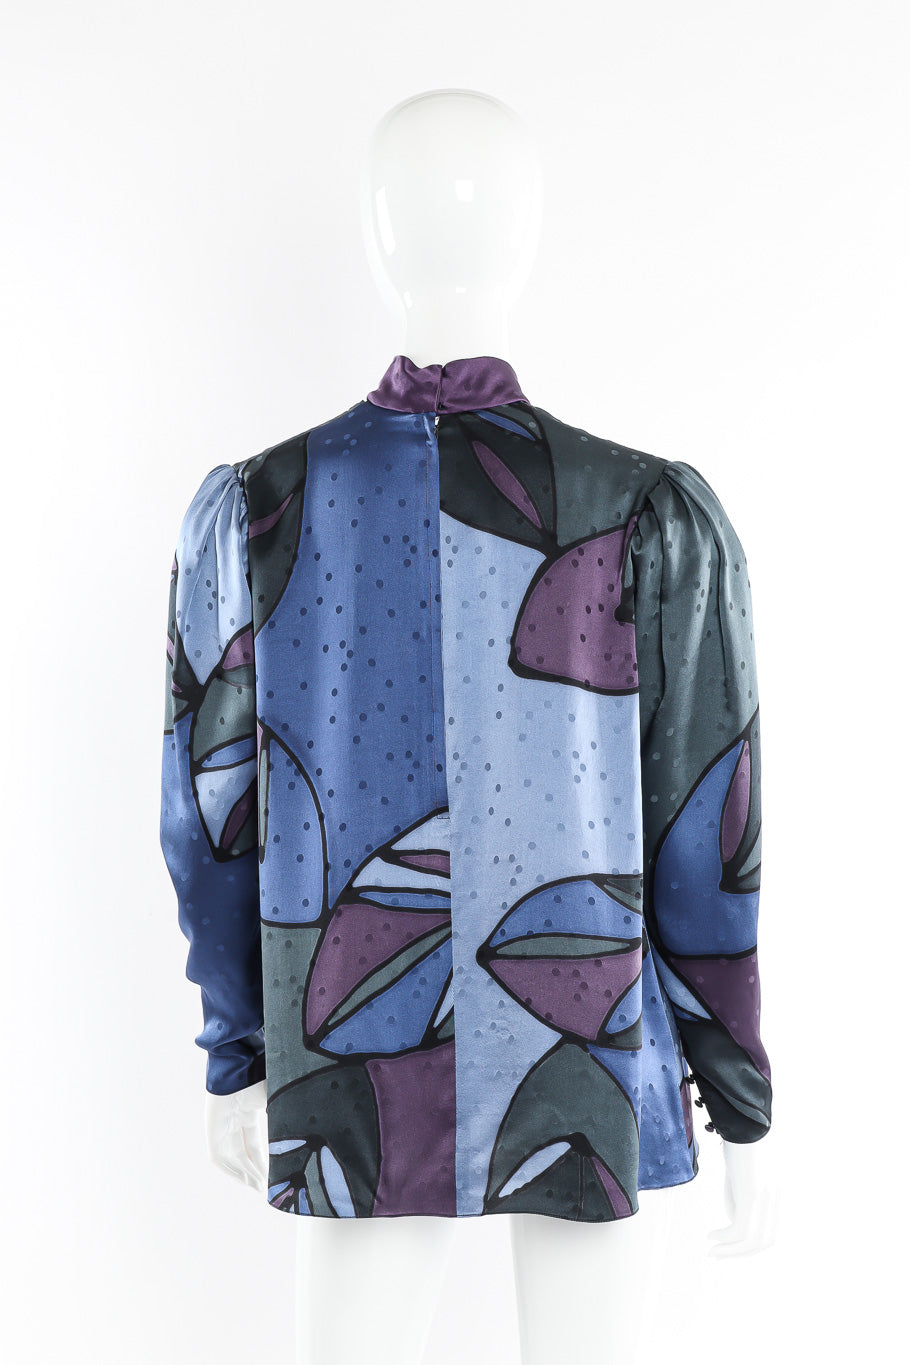 Silk blouse by Sansappelle Collections mannequin back @recessla